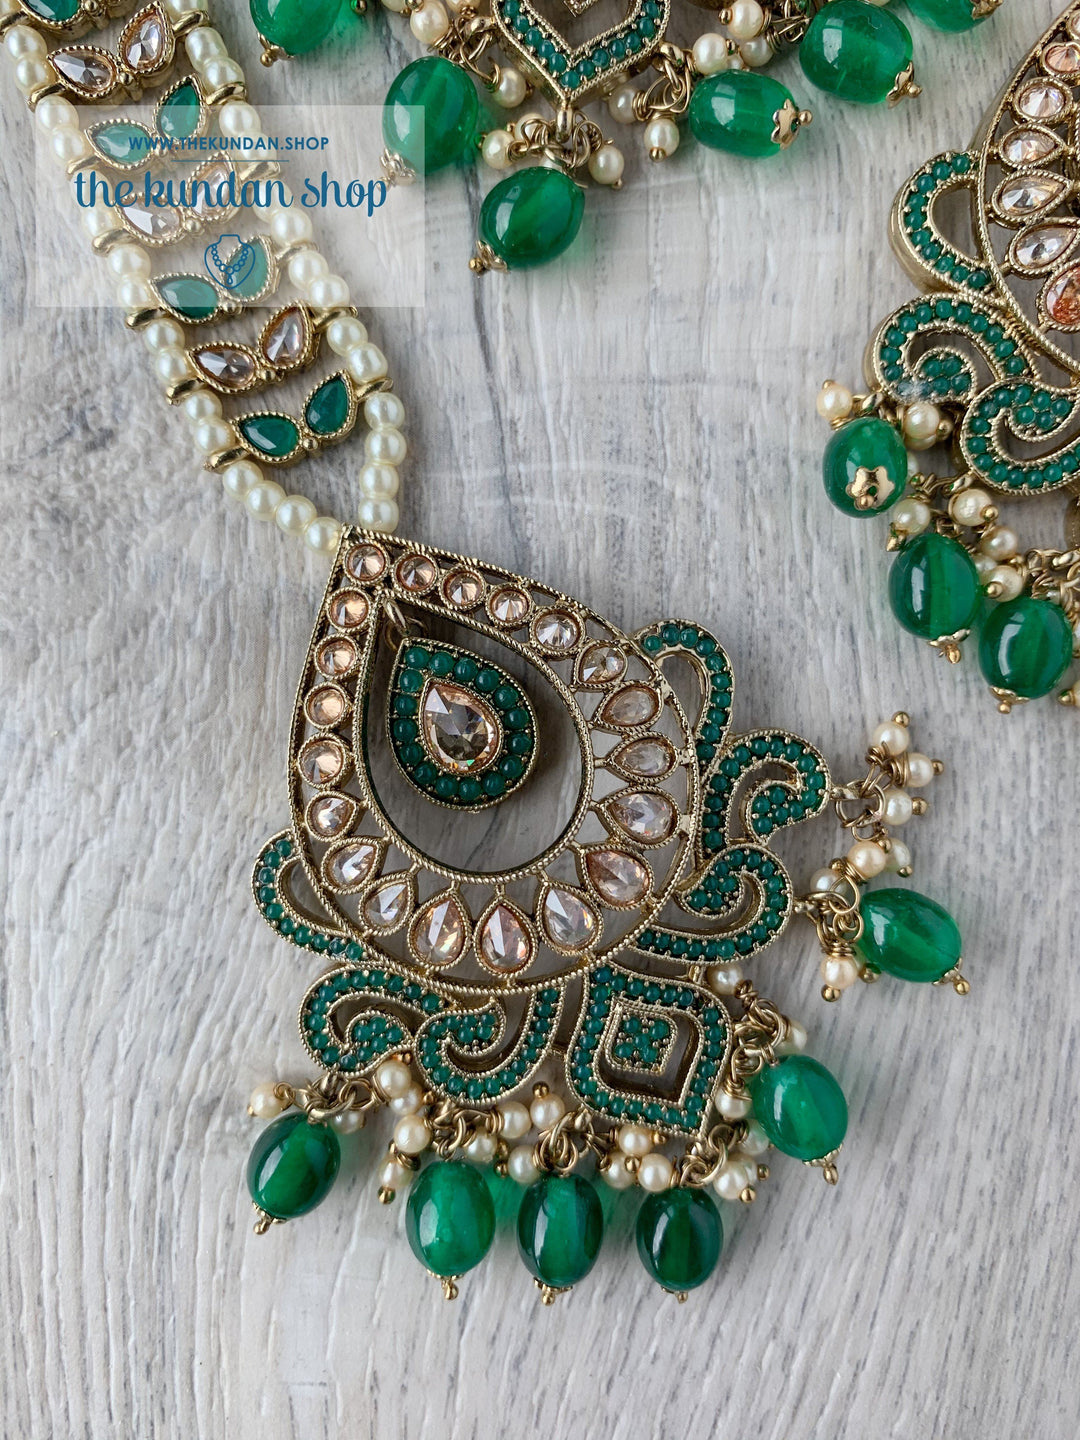 At Ease in Emerald Earrings + Tikka THE KUNDAN SHOP 